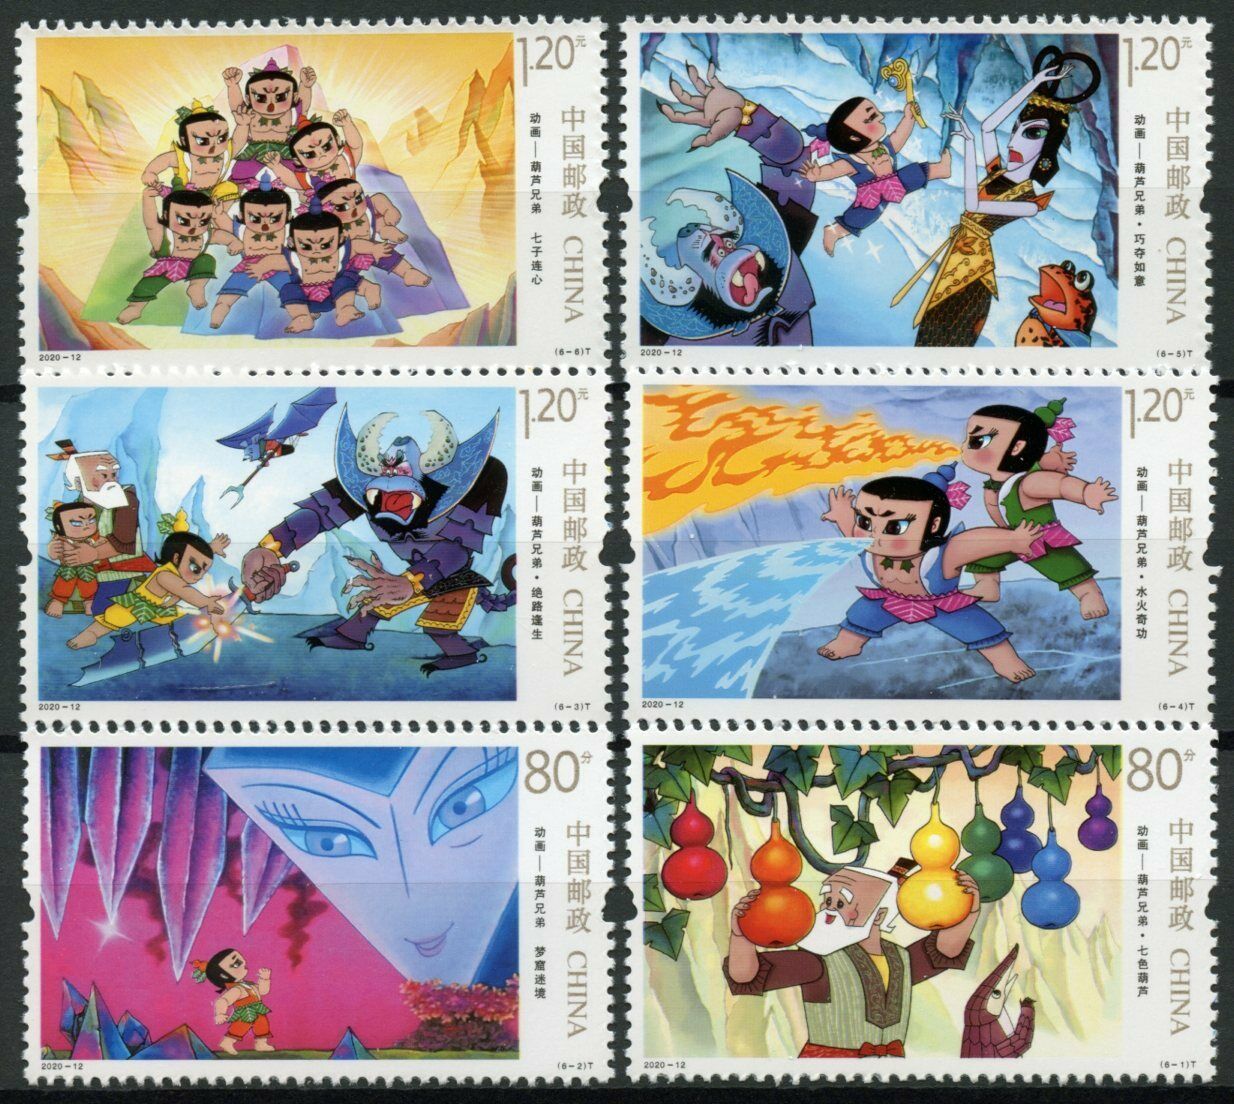 China Cartoons Stamps 2020 MNH Calabash Bros Brothers Chinese Animation 6v Set